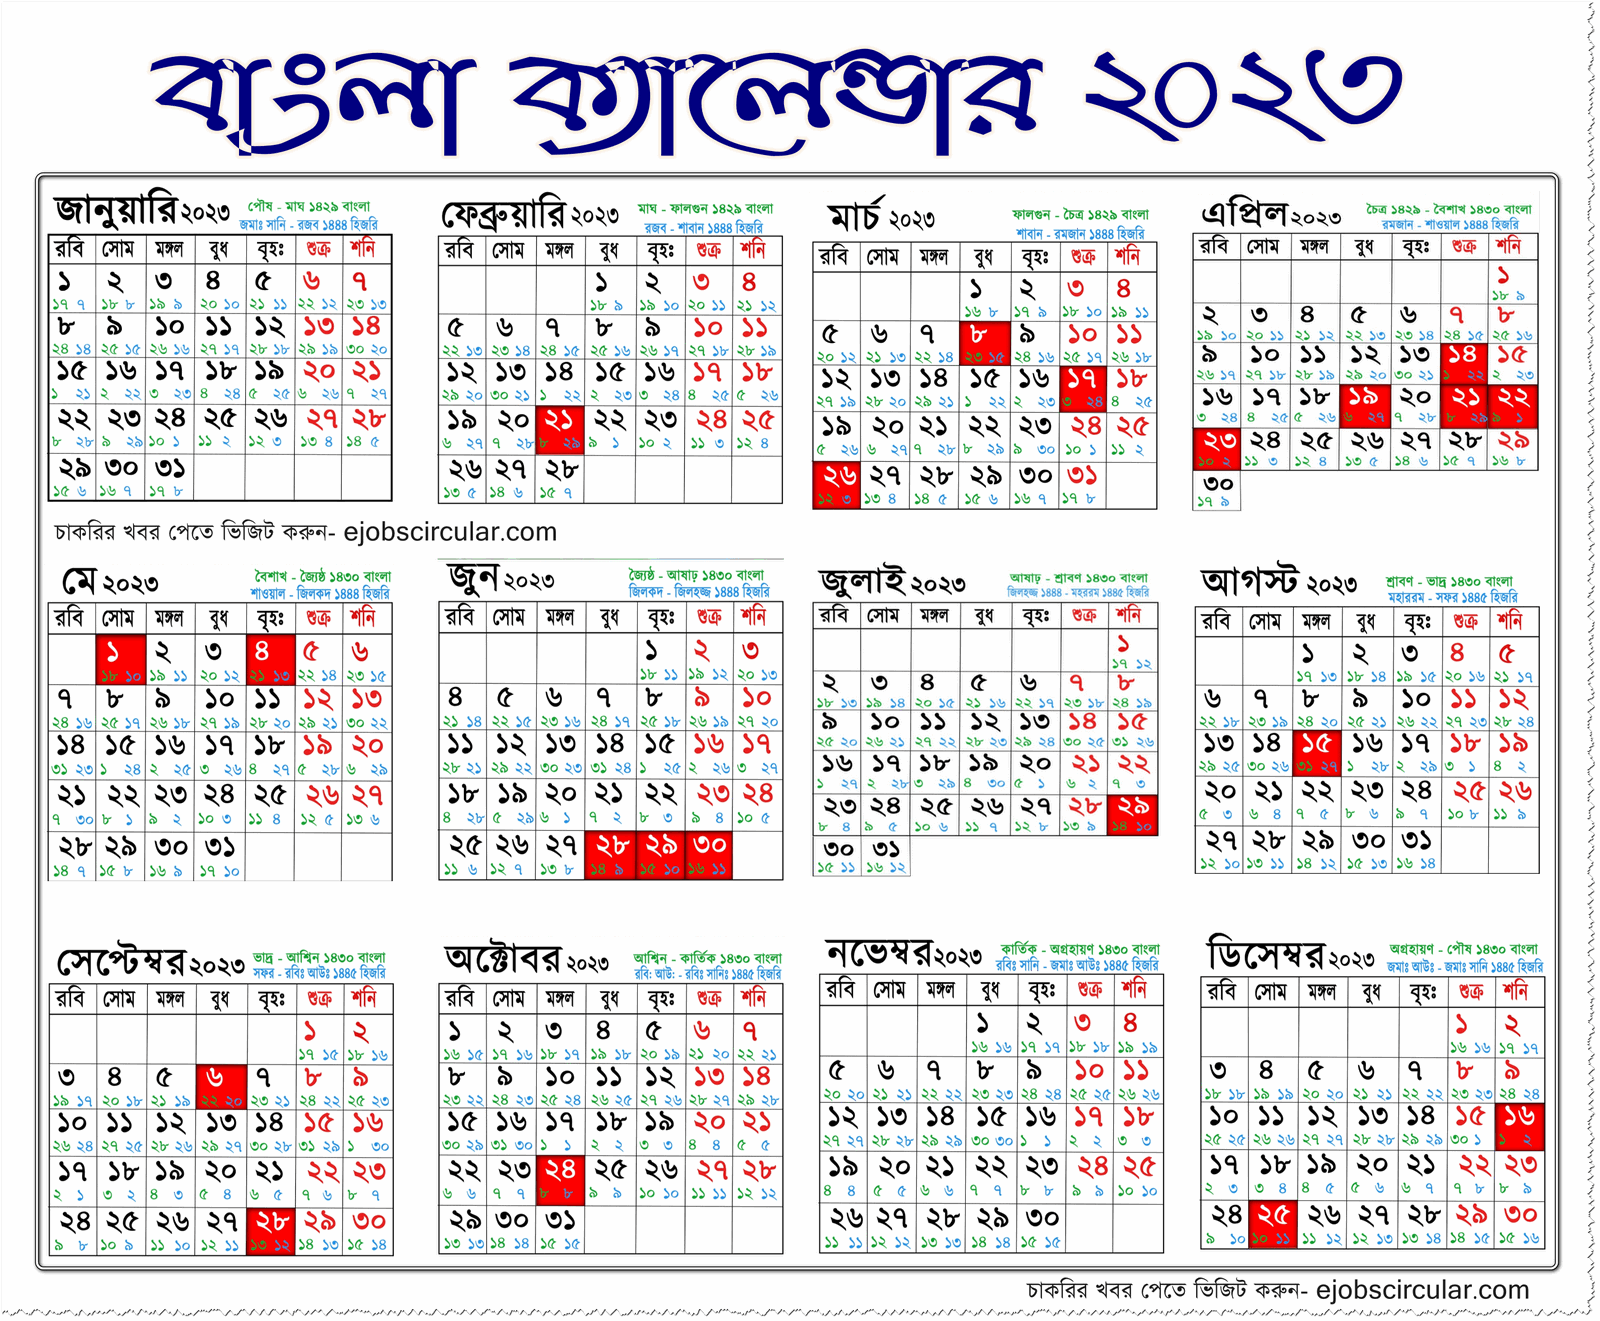 Bangla calendar 2023 - Bangla Date Today (আজকের বাংলা তারিখ)